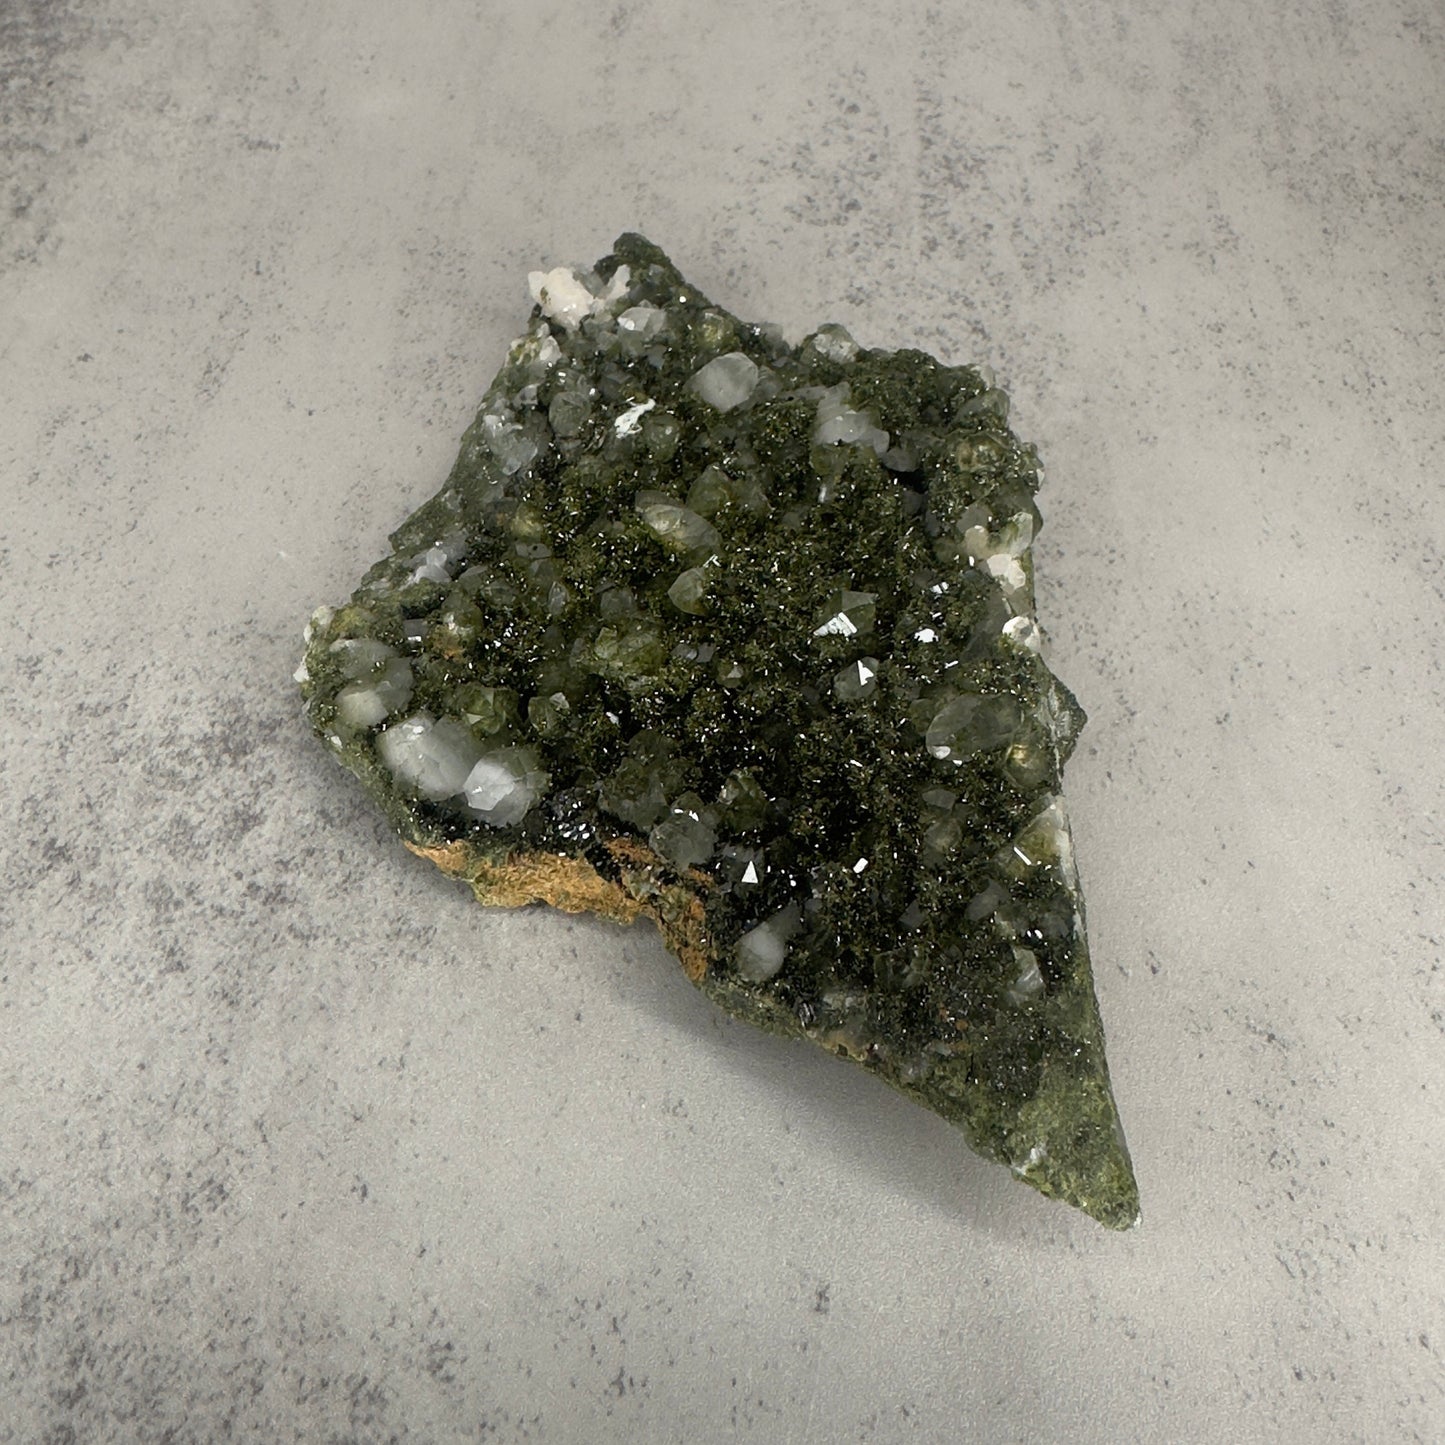 Spectacular Epidote on Quartz Genuine Crystal Cluster Specimen From Turkey | Tucson Gem Show Exclusive